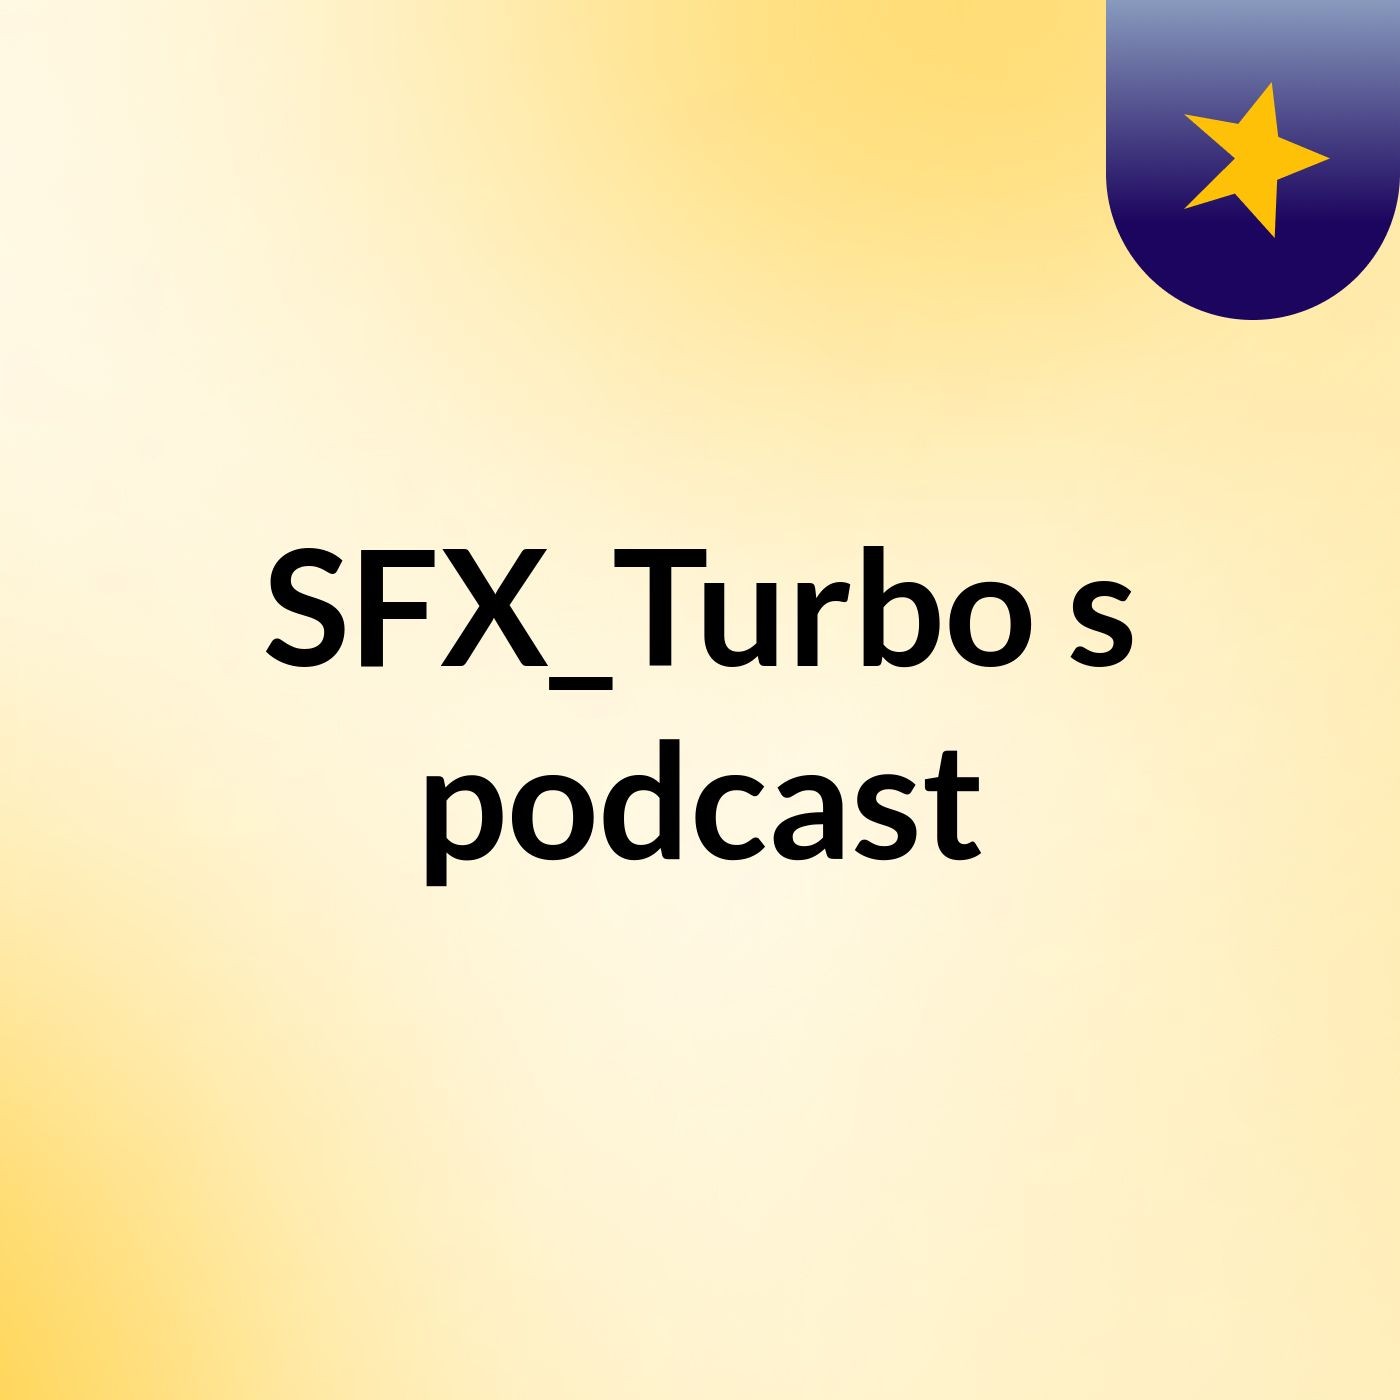 Episode 4 - SFX_Turbo's podcast